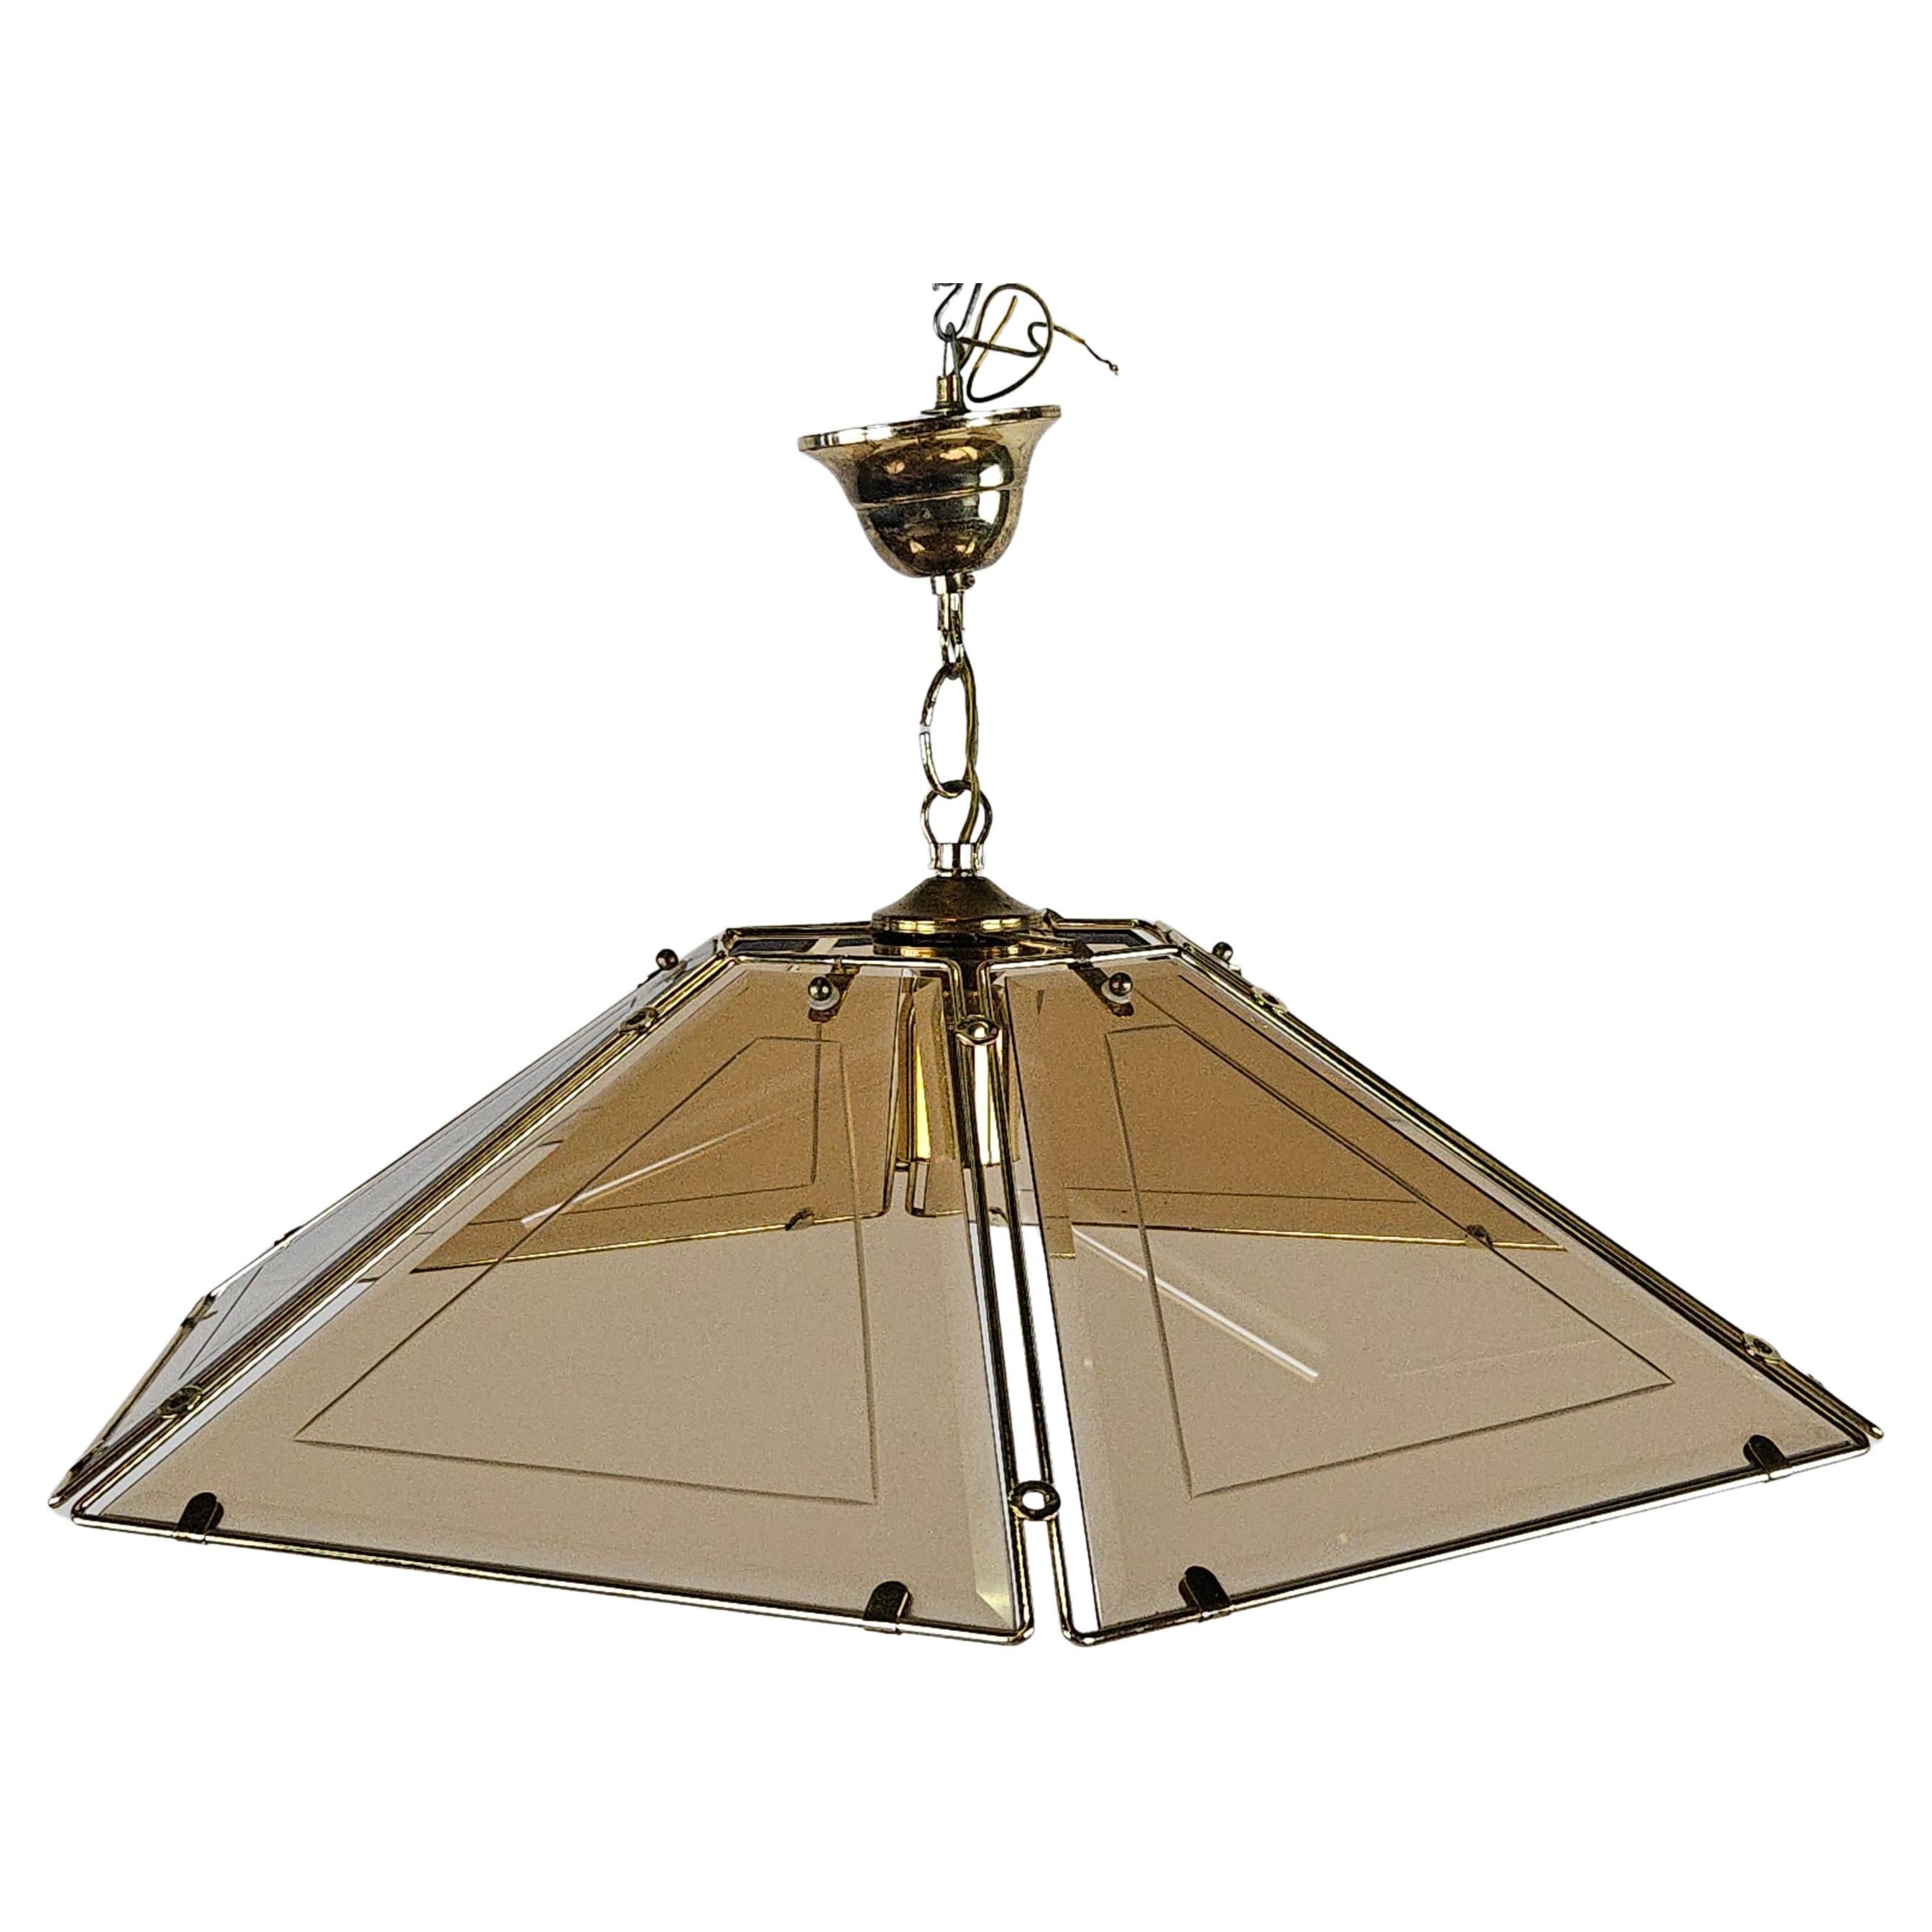 Hexagonal brass and glass chandelier 20th century